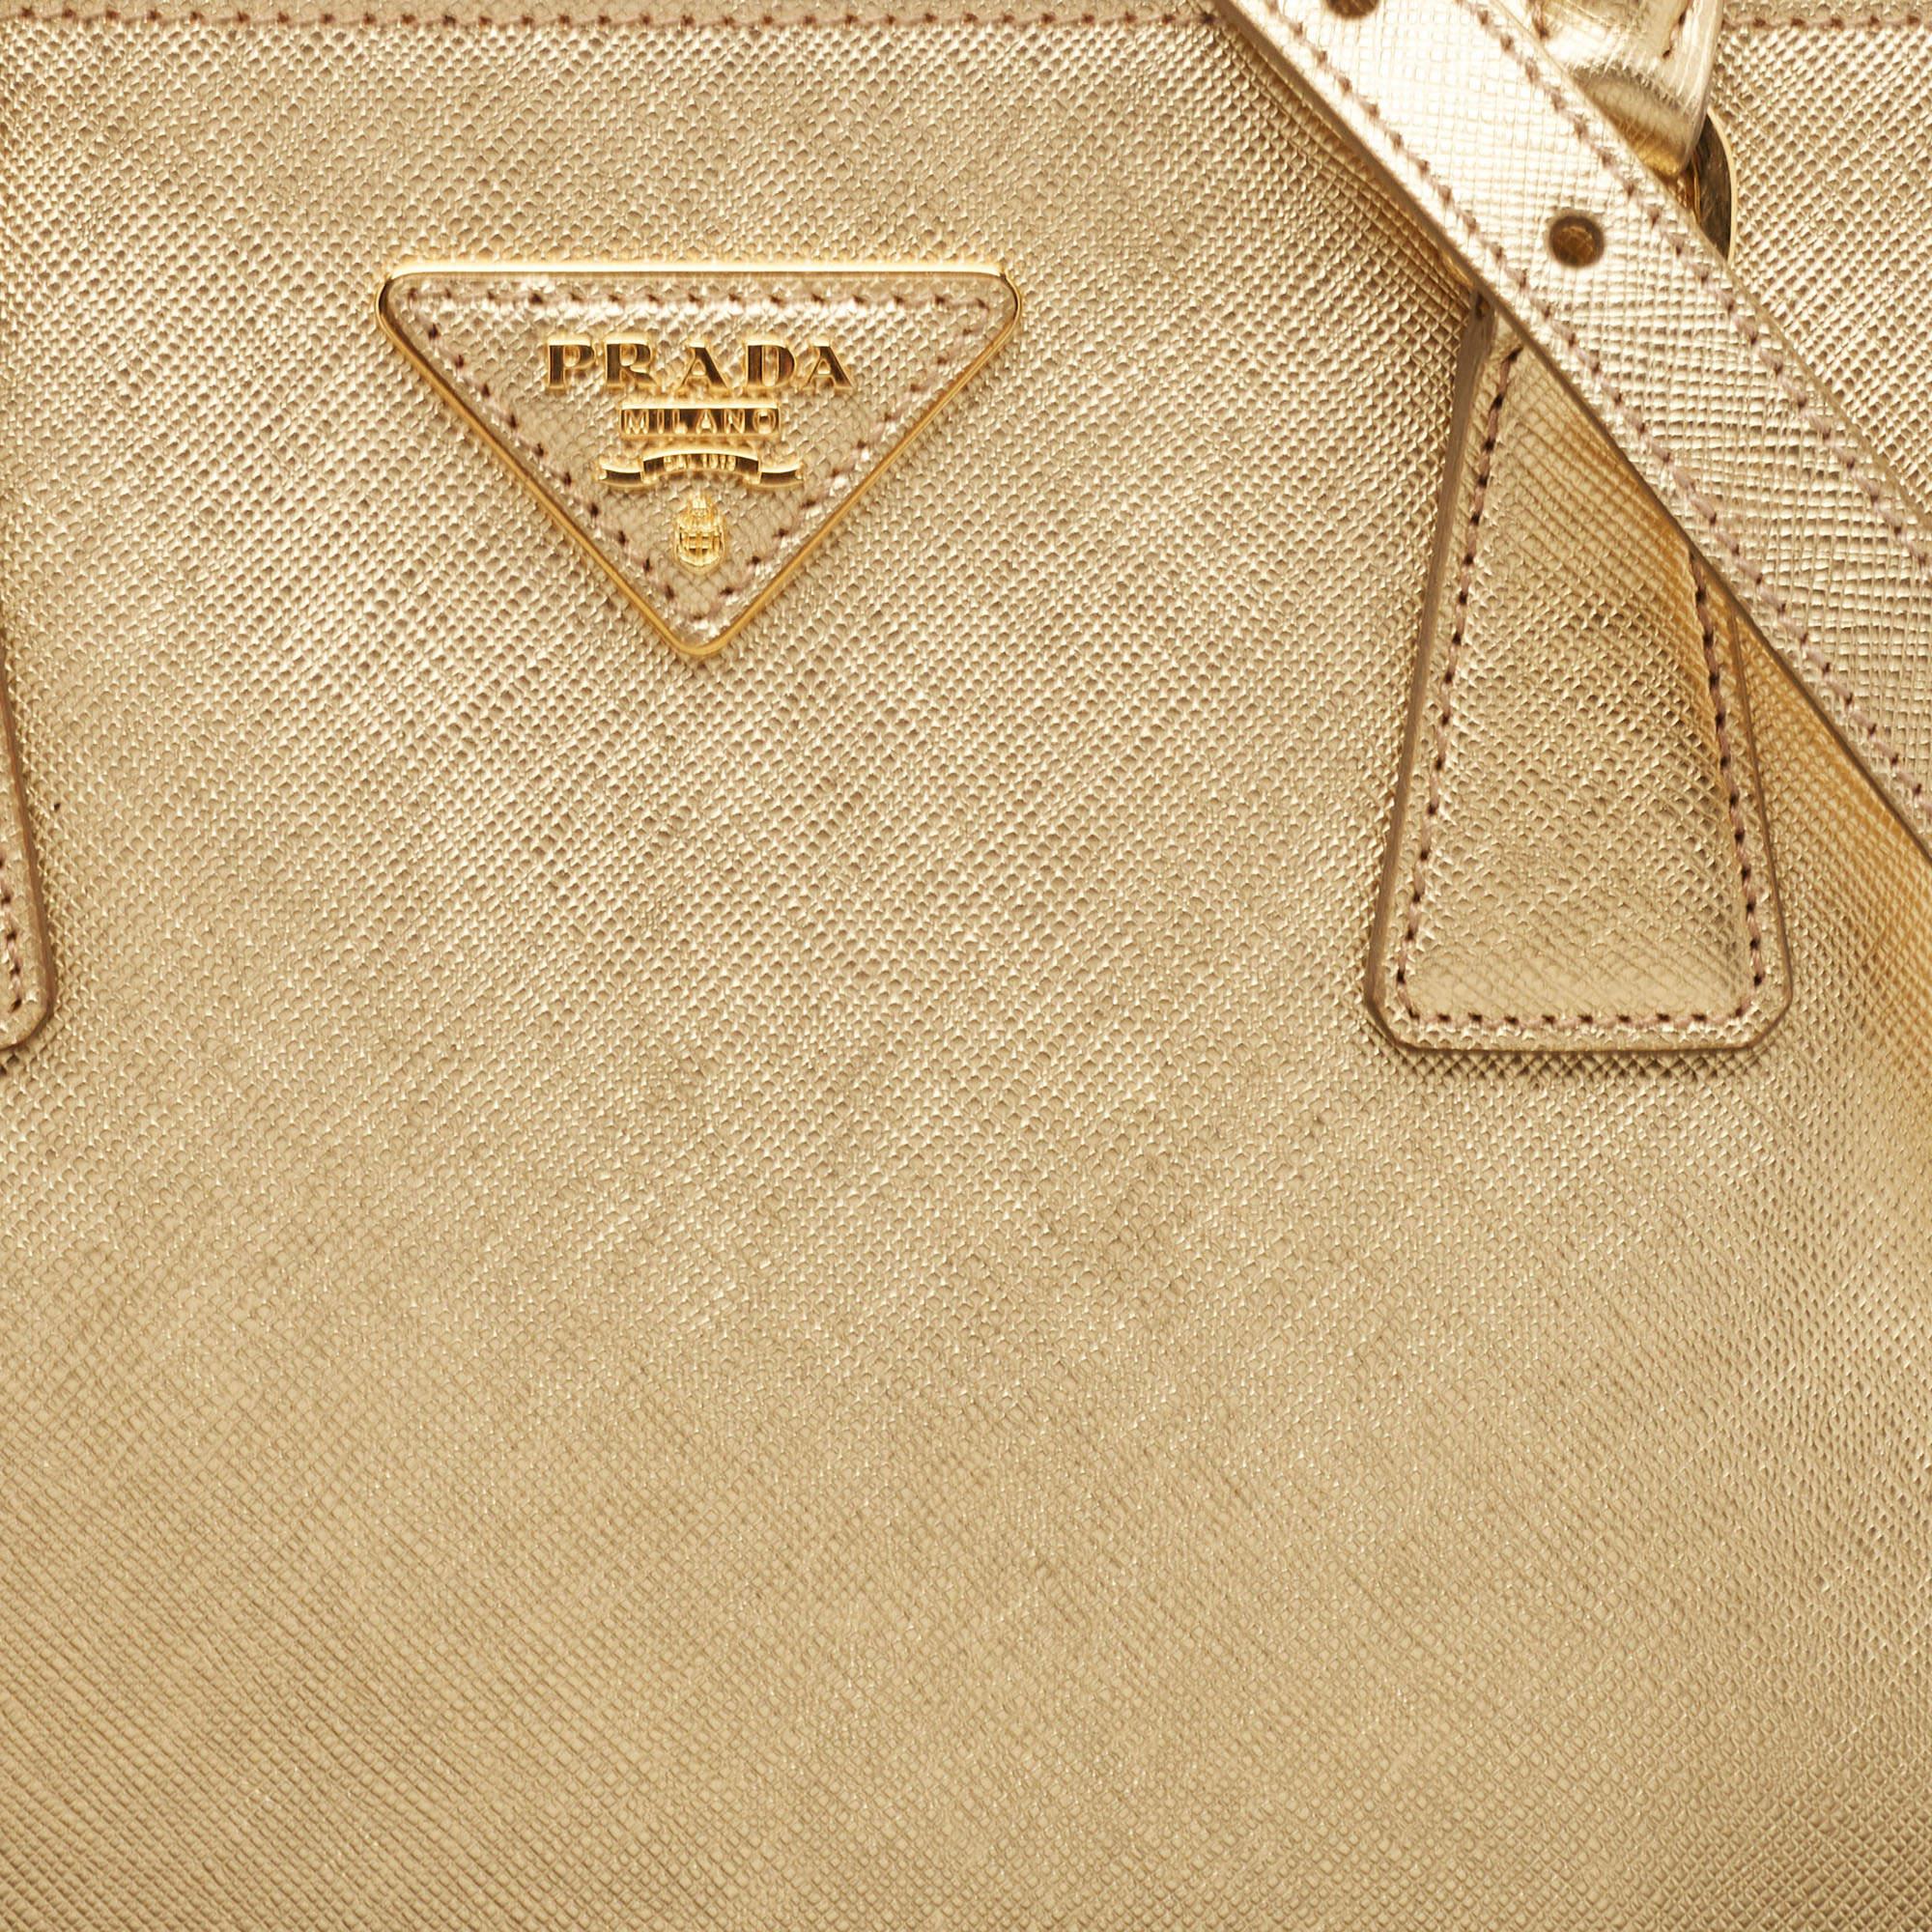 Prada Gold Saffiano Lux Leather Small Double Zip Tote For Sale 10